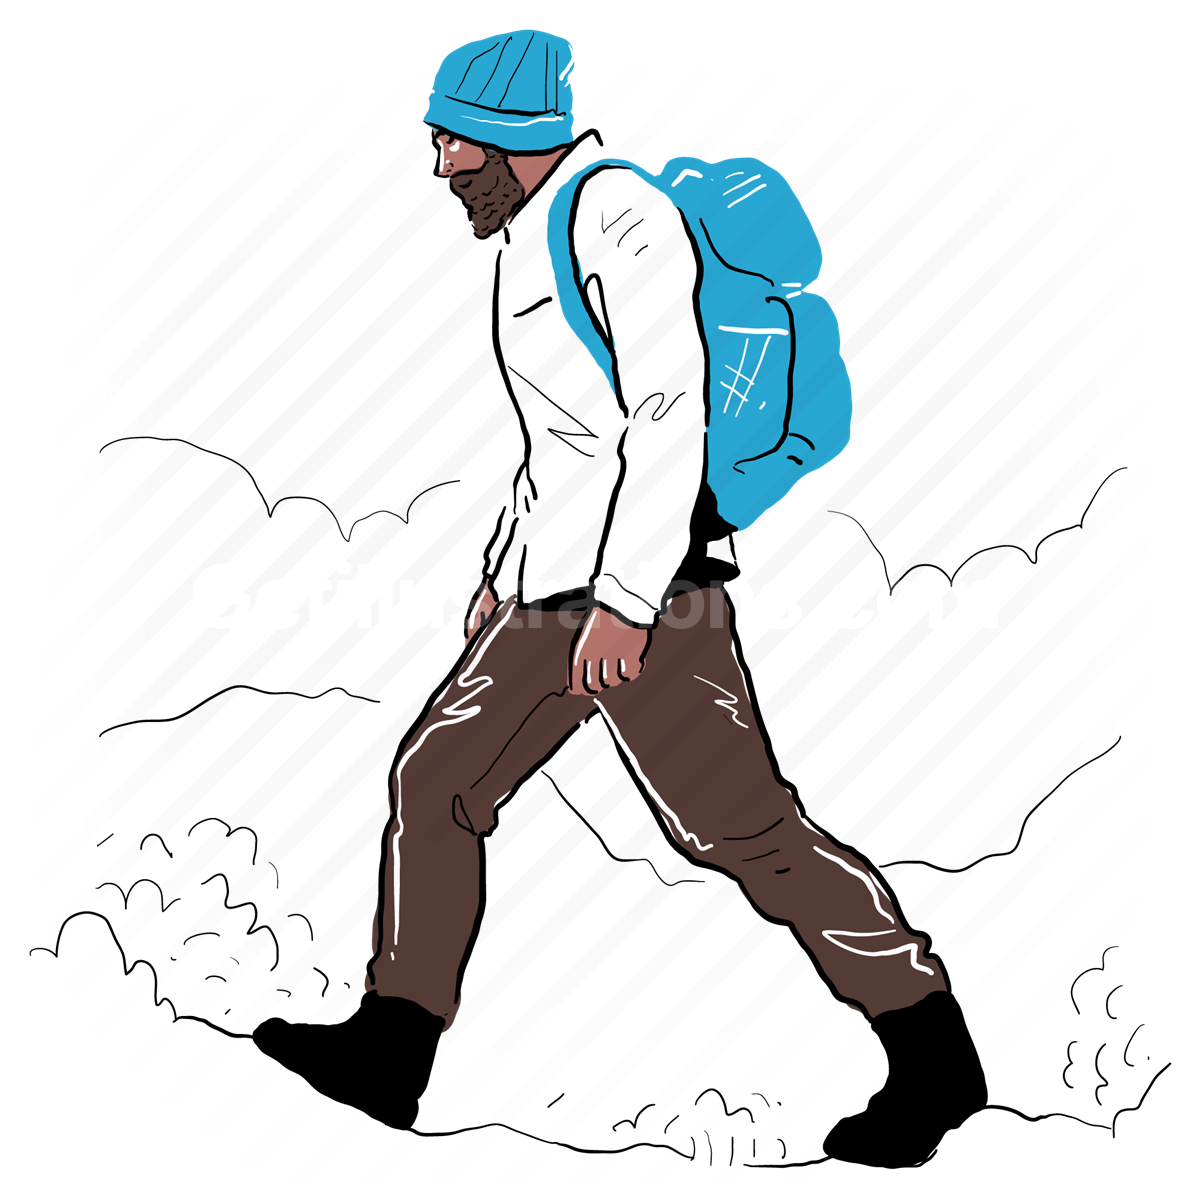 backapck, hiker, bag, man, people, abroad, outdoors, activity